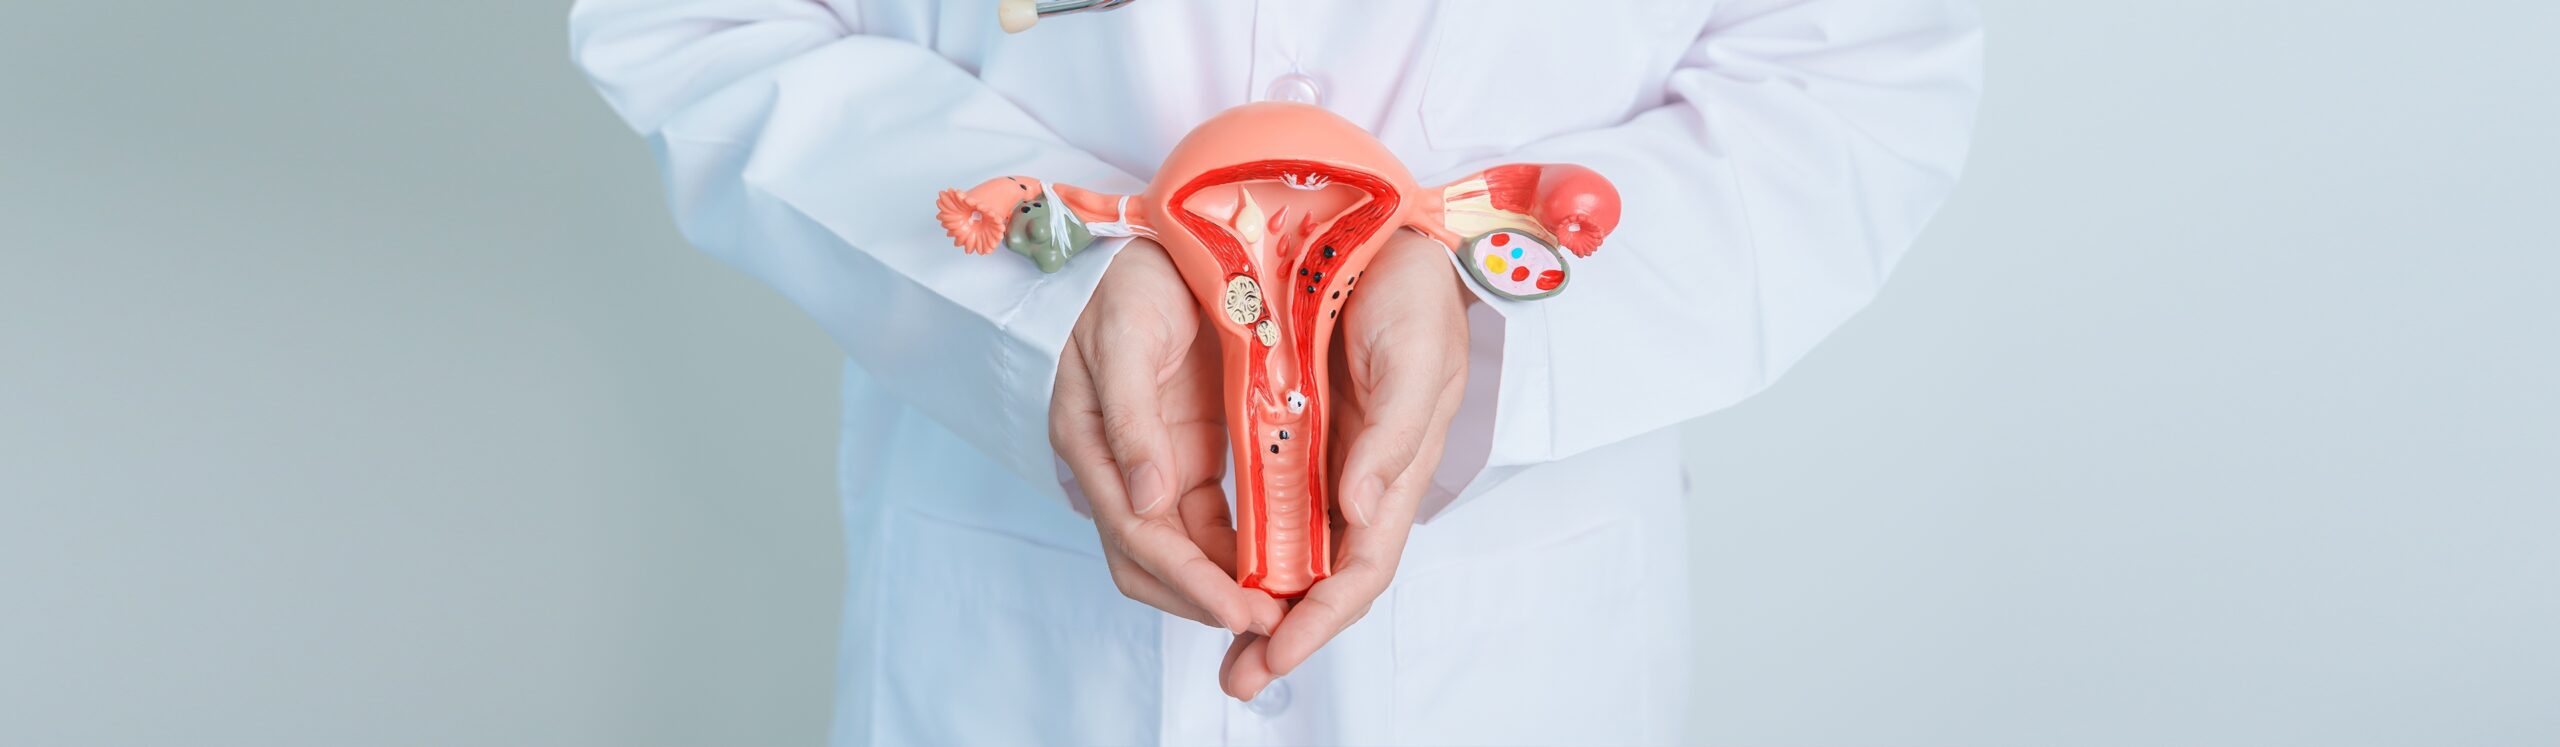 Fondation-recherche-endometriose